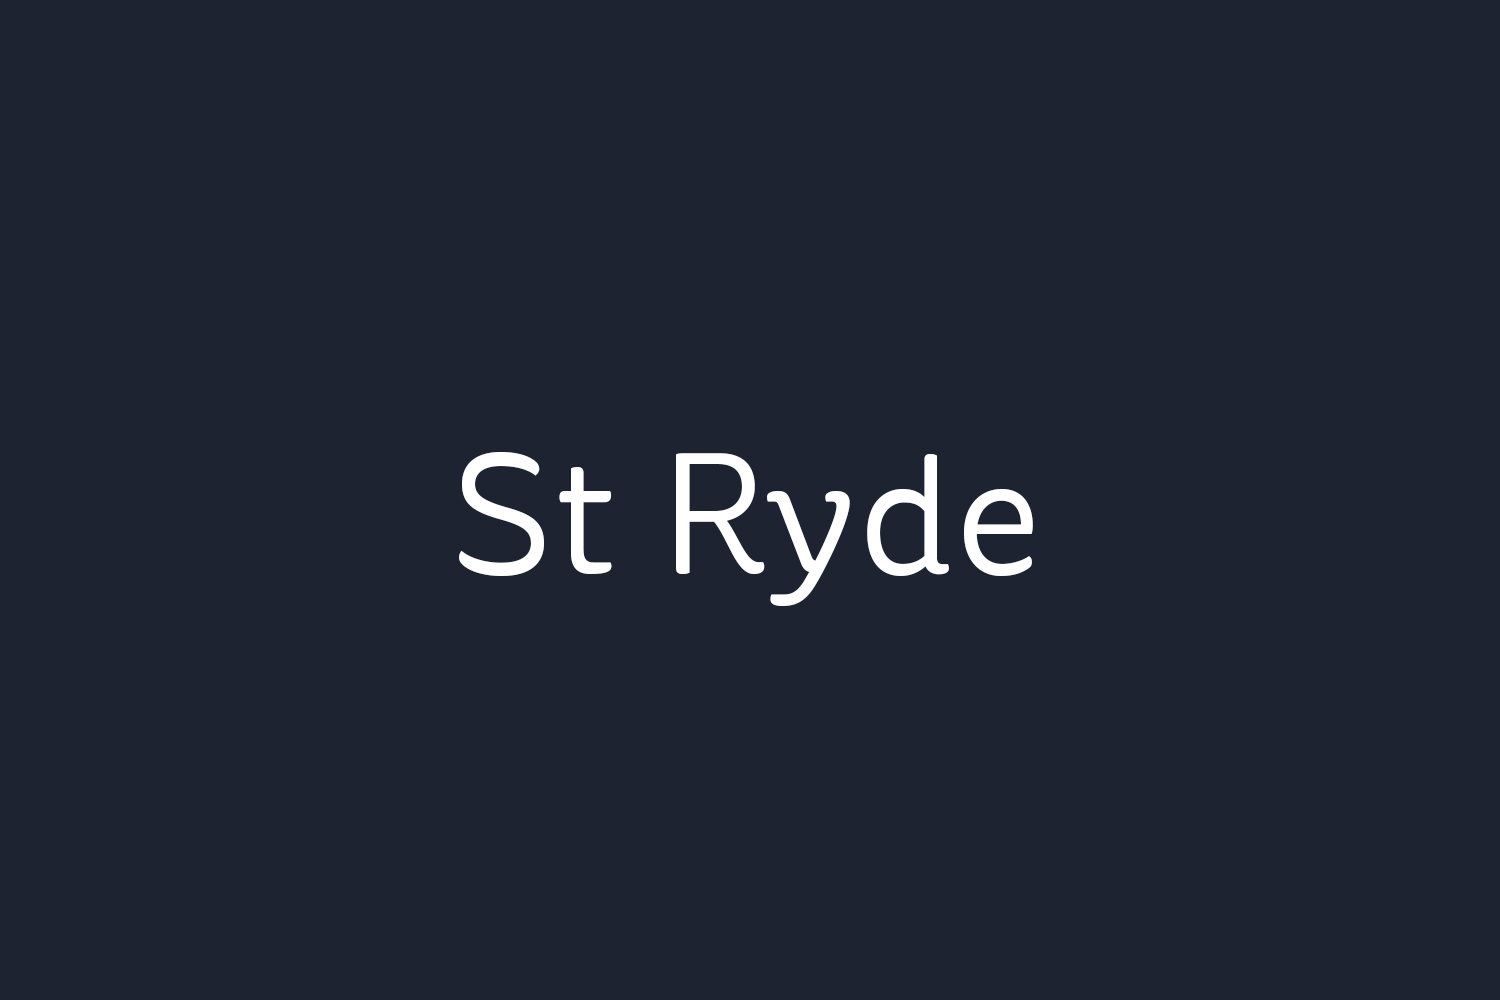 St Ryde